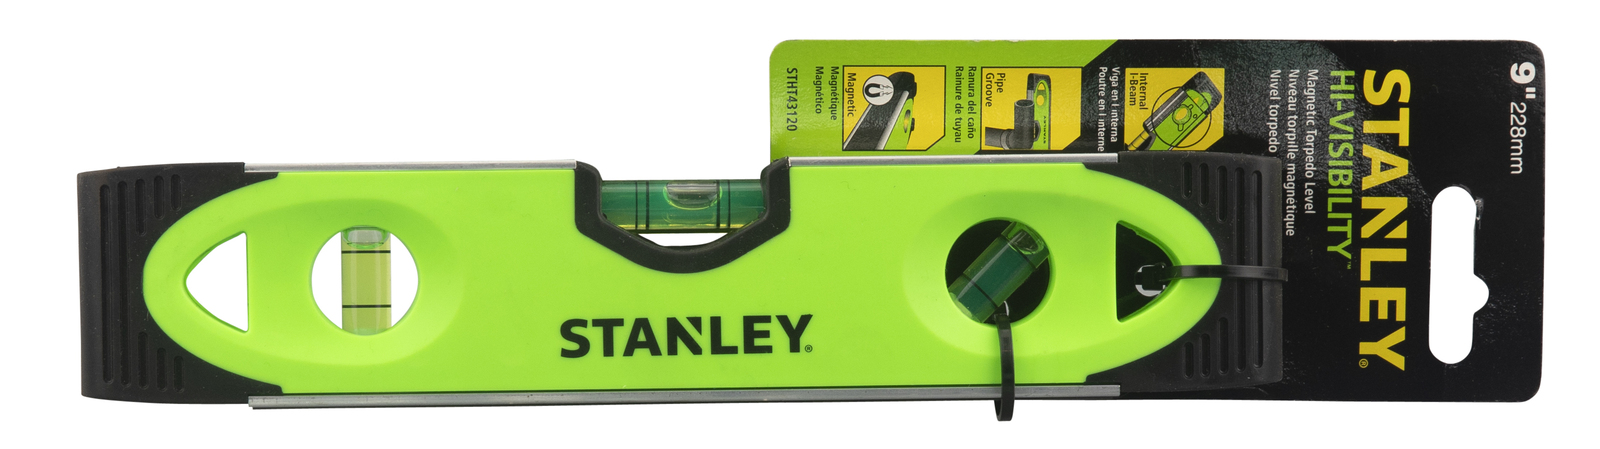 Stanley 300mm Level - Fluro